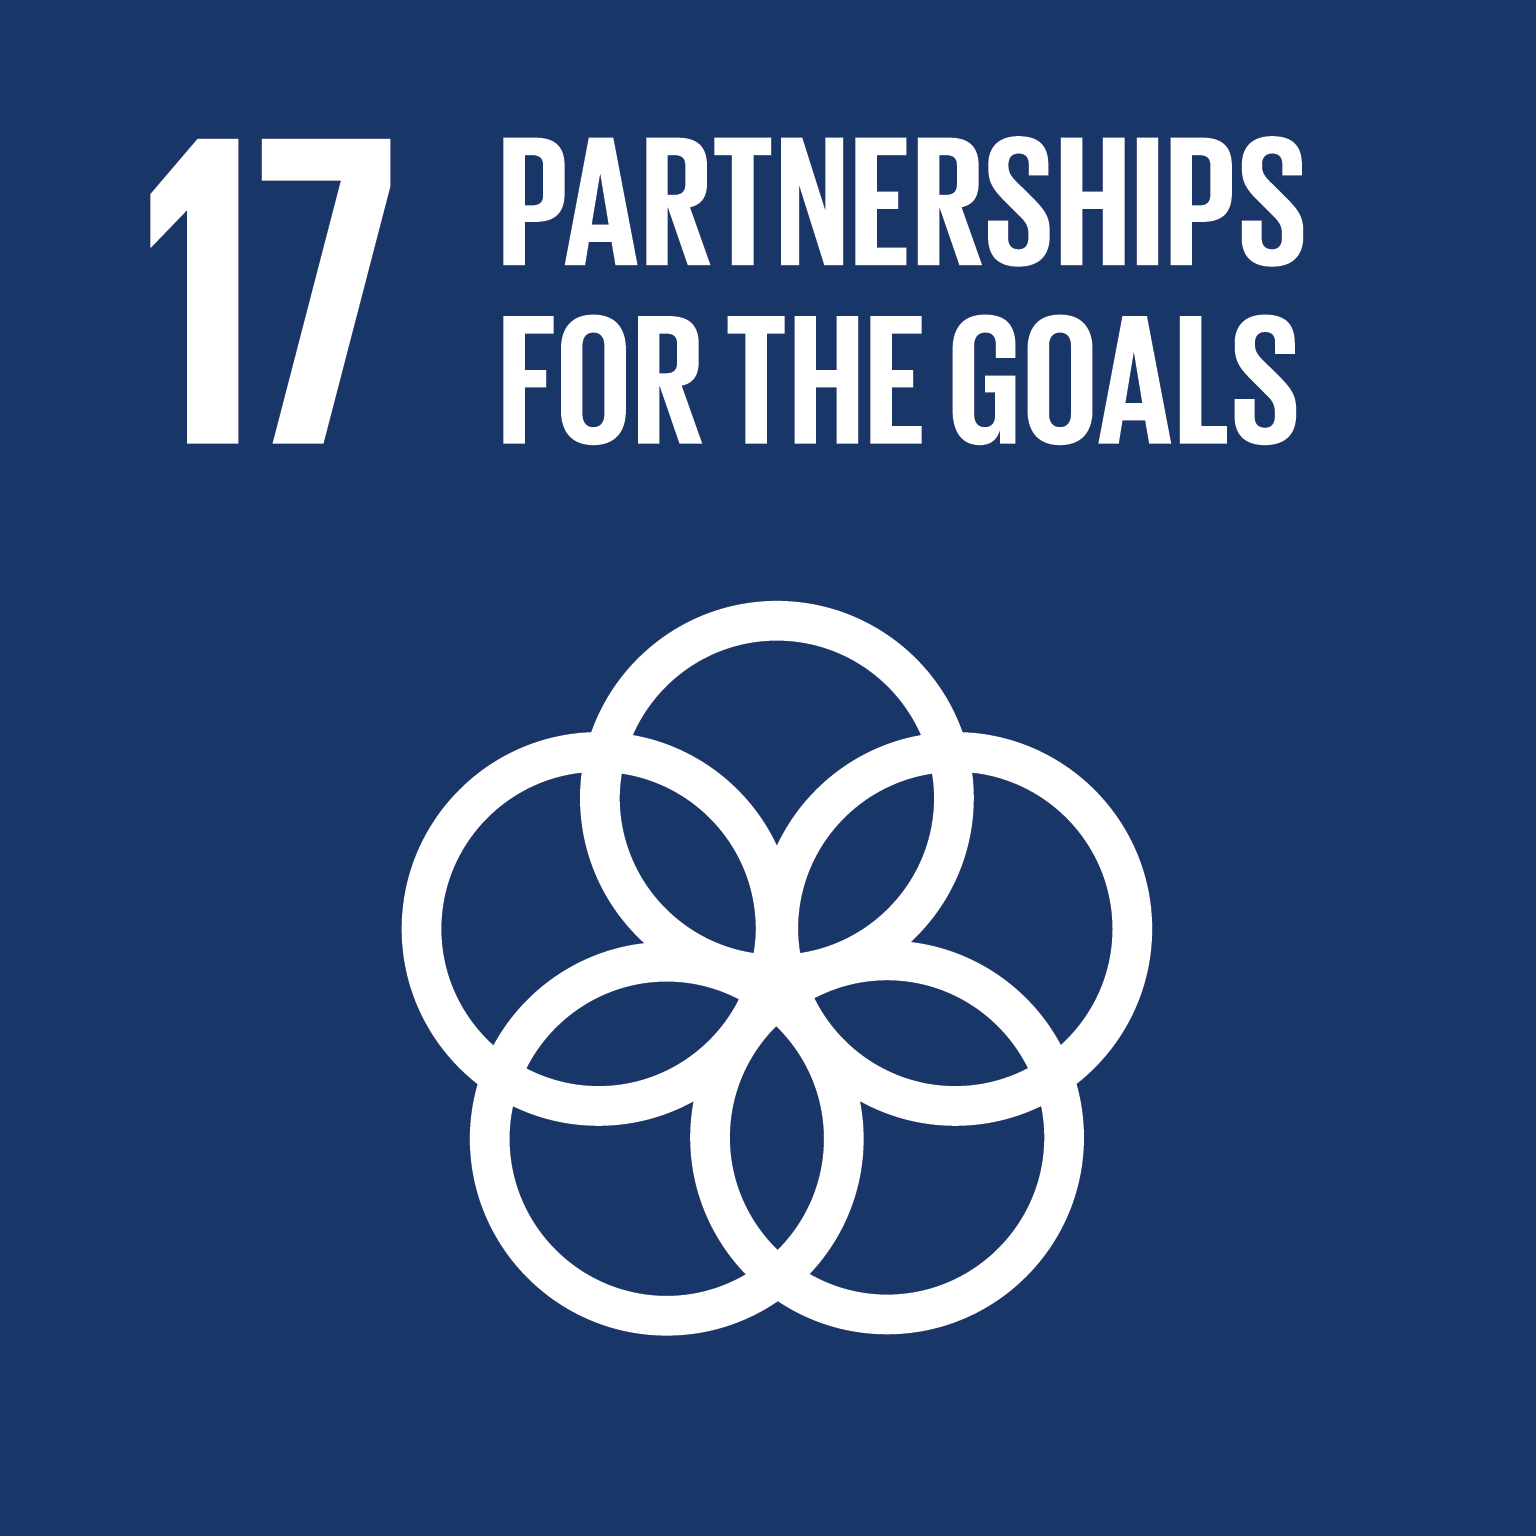 Goal 17. Partnerships for the goals